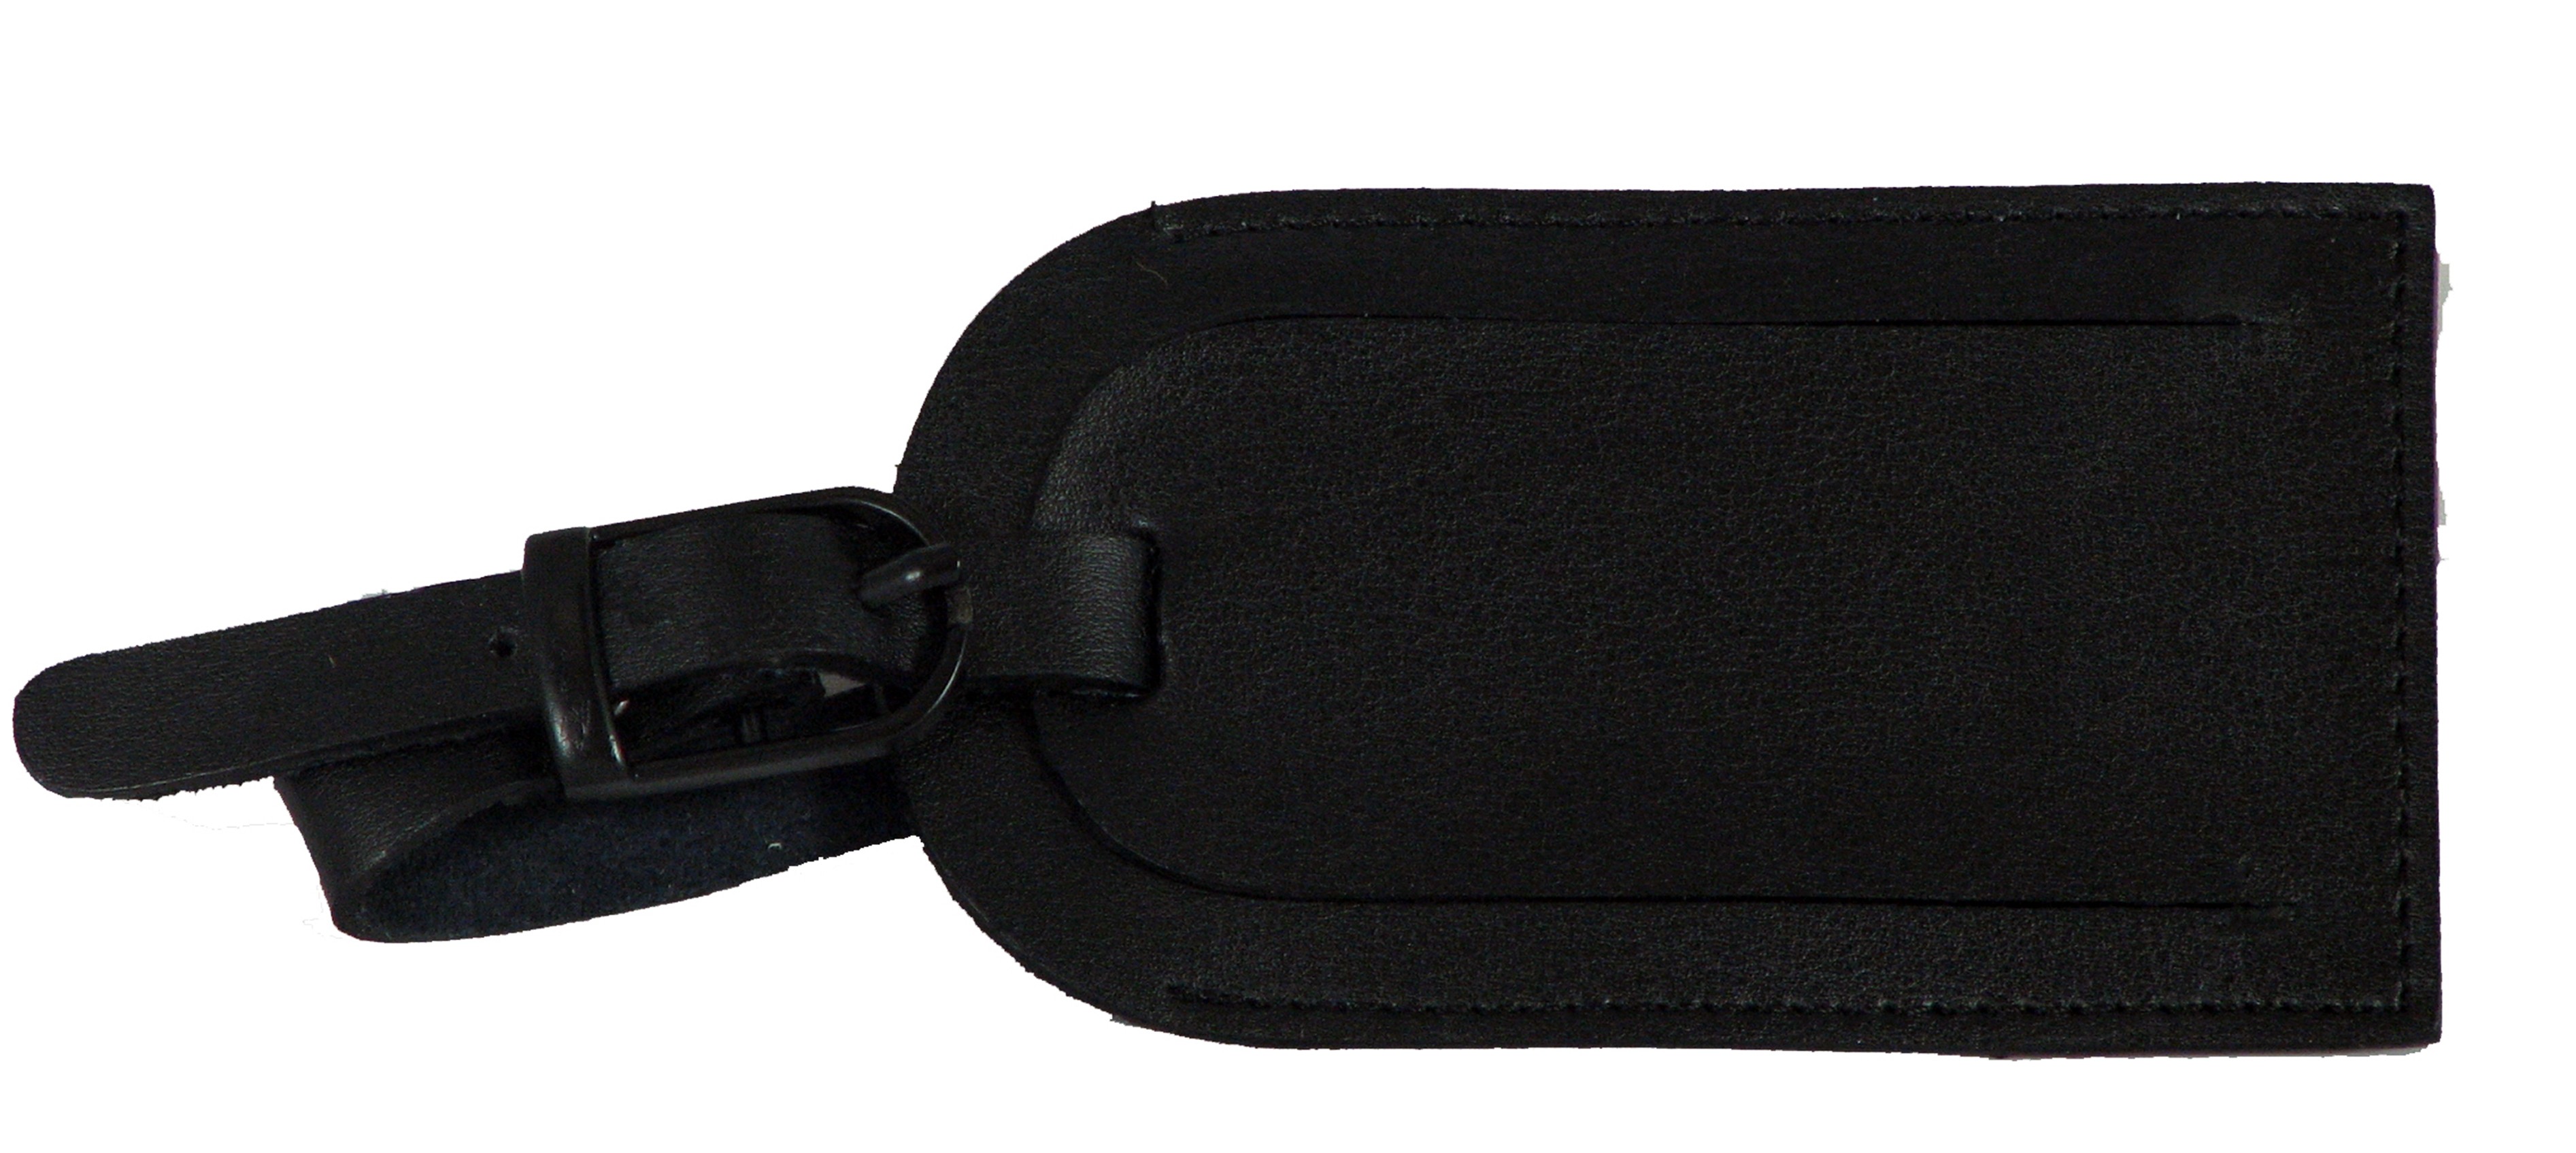 Falcon Leather Luggage Label - FI4023 Black